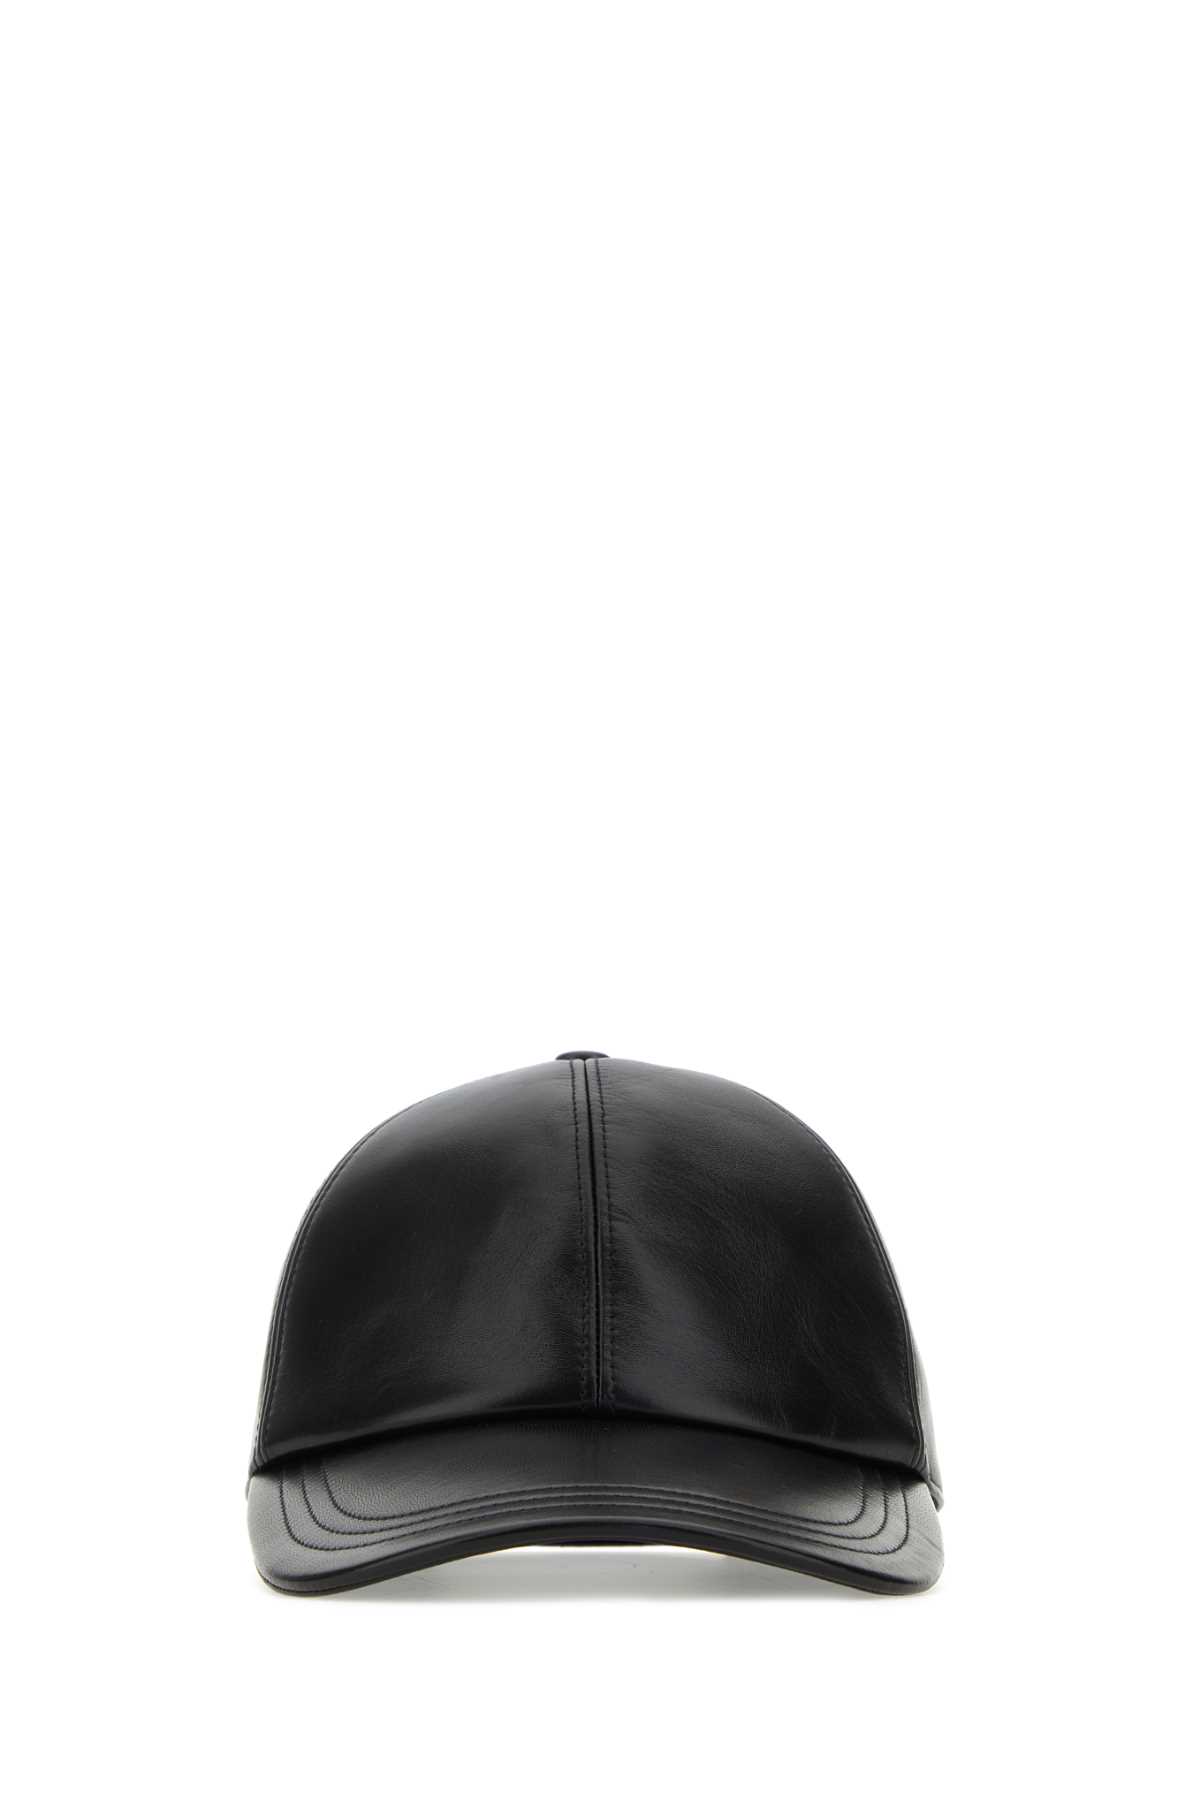 Prada Black Nappa Leather Baseball Cap